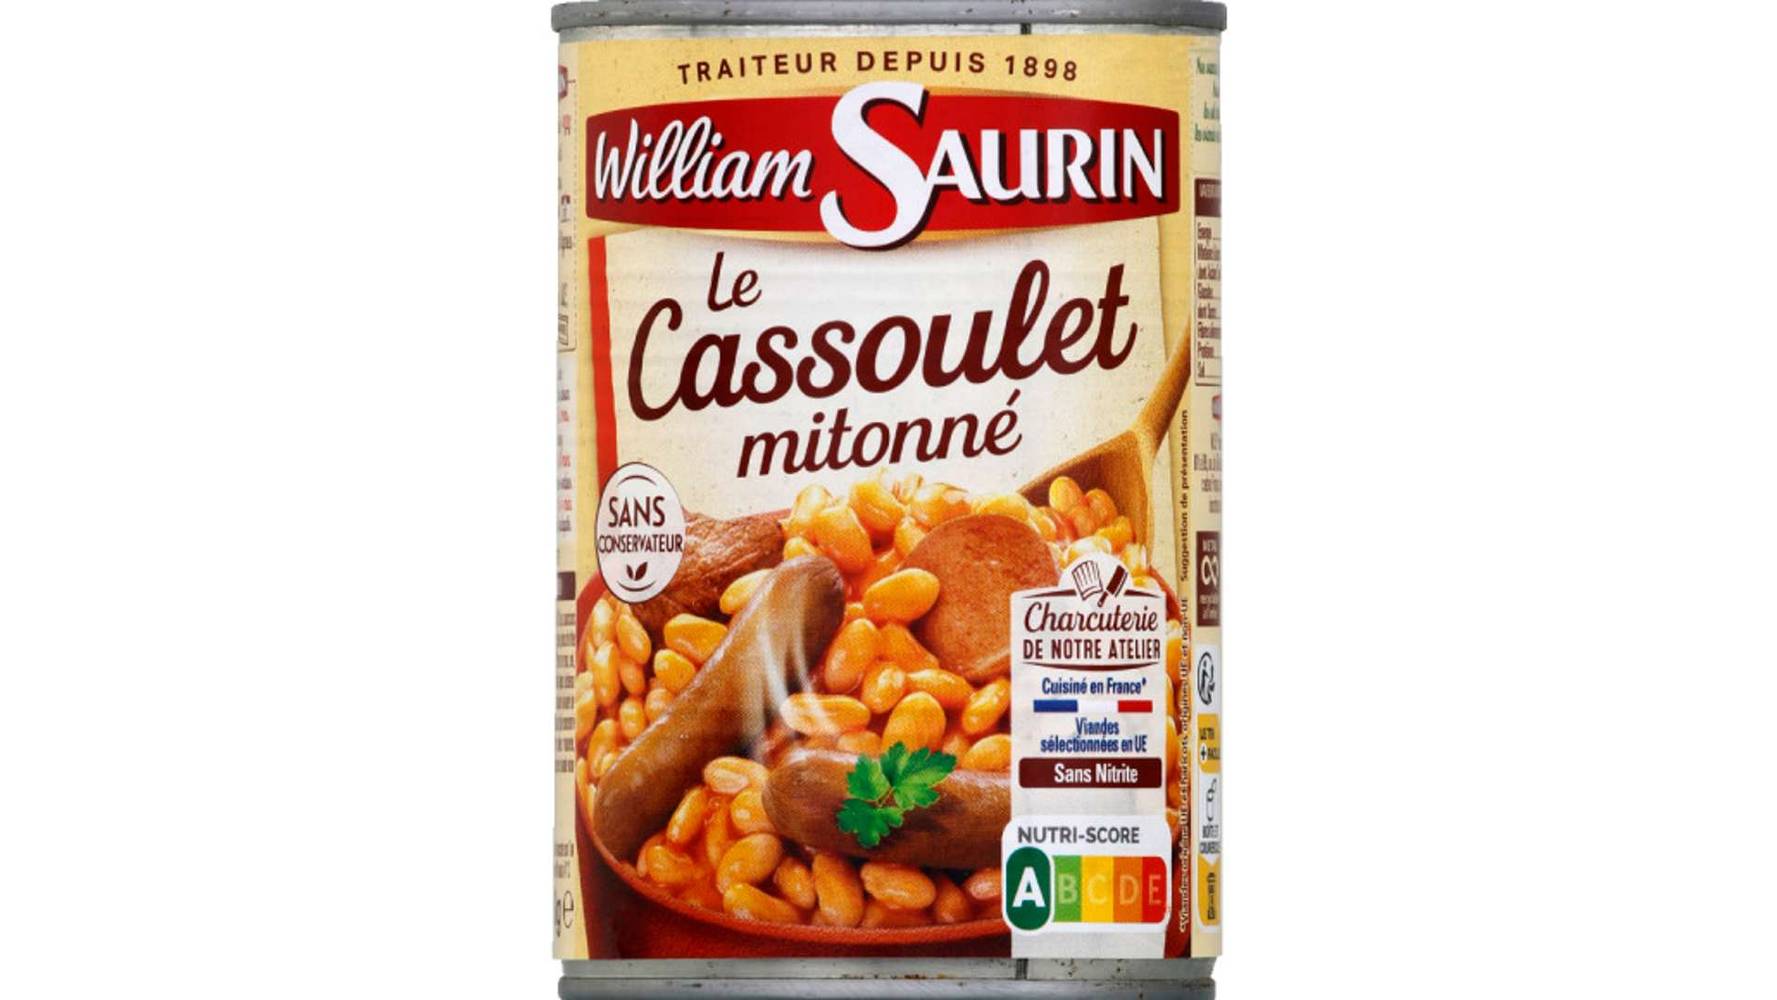 William Saurin Cassoulet mitonné Plat cuisiné, 420g